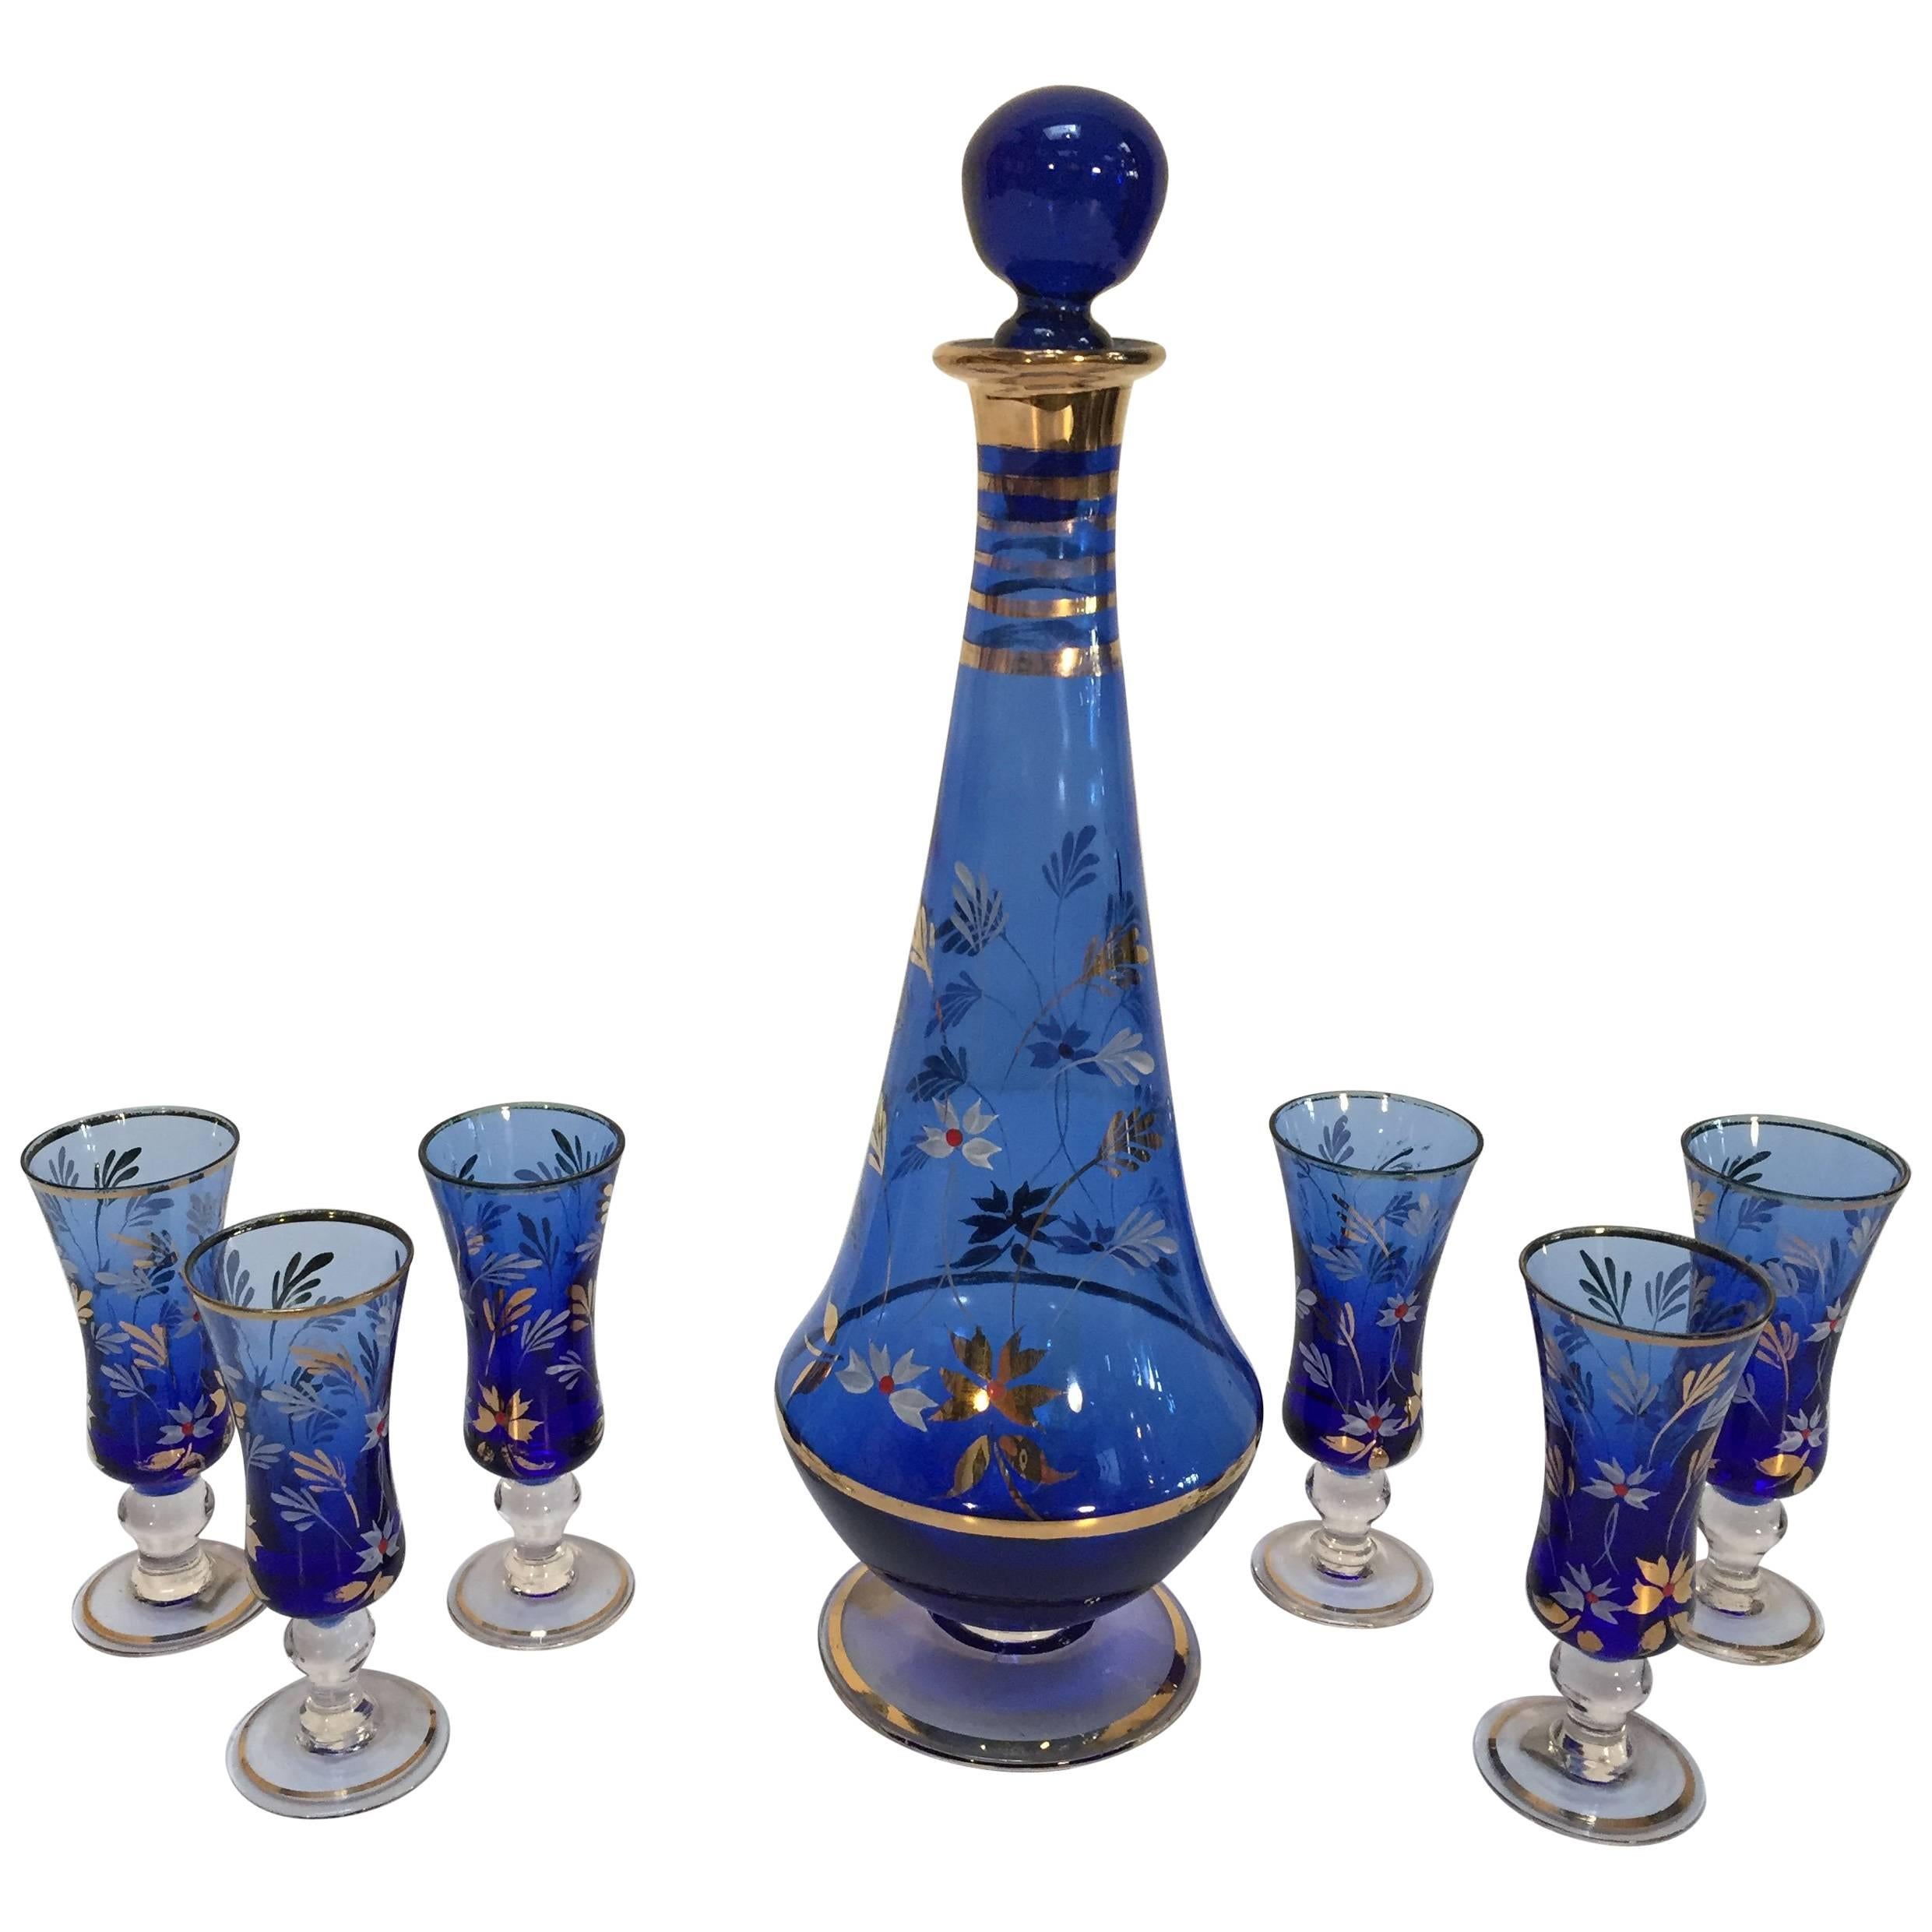 Cobalt Blue Enameled Glass Liquor Set Decanter and Six Glasses from Portugal